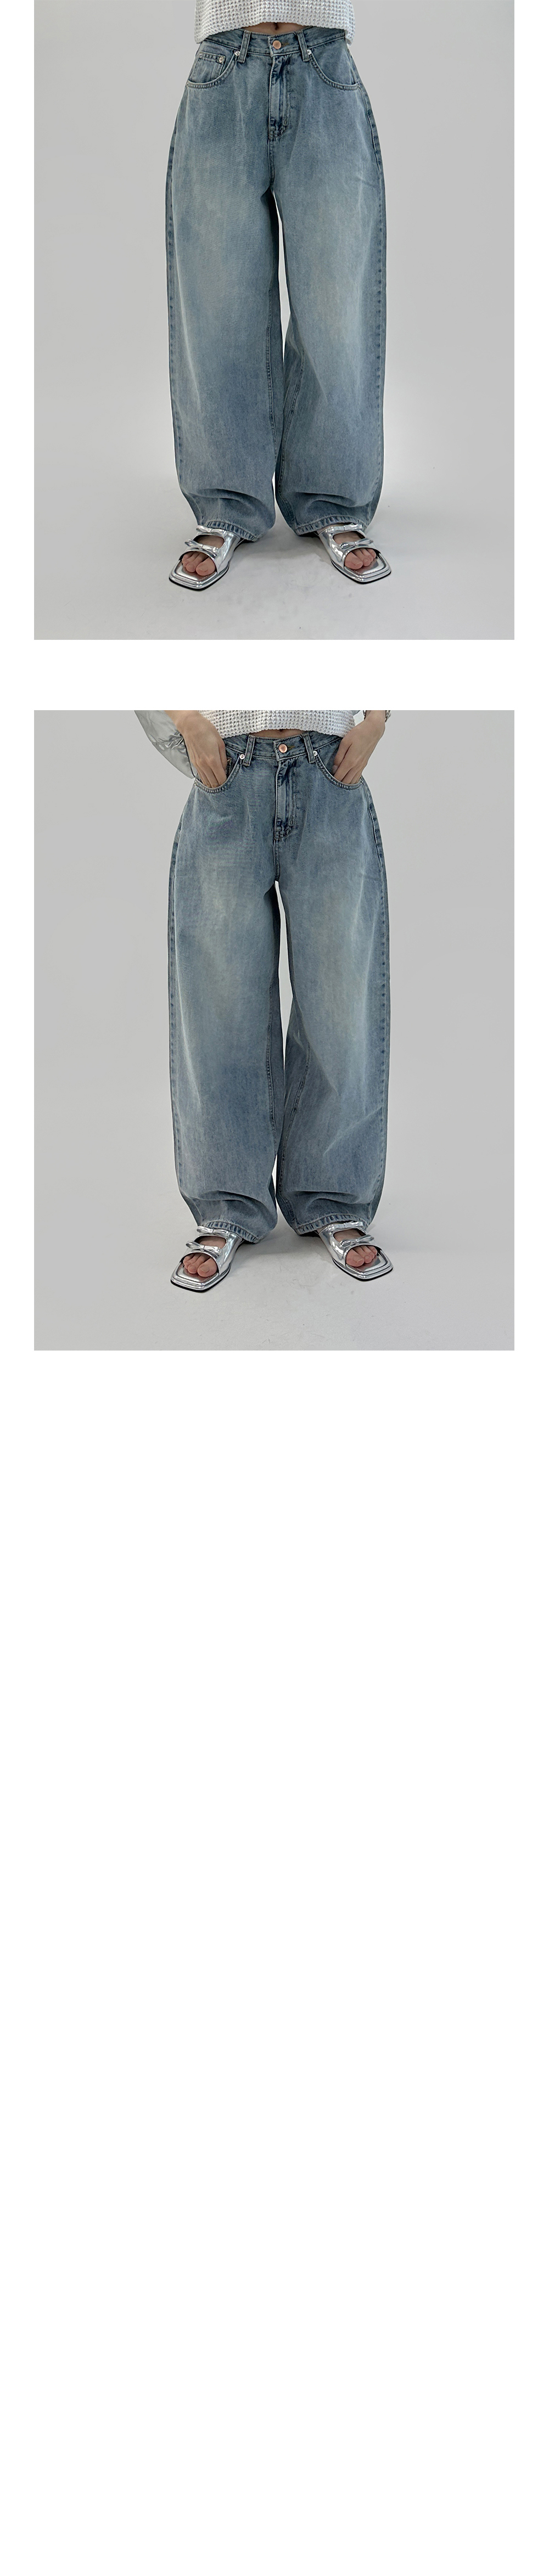 suspenders skirt/pants grey color image-S1L11